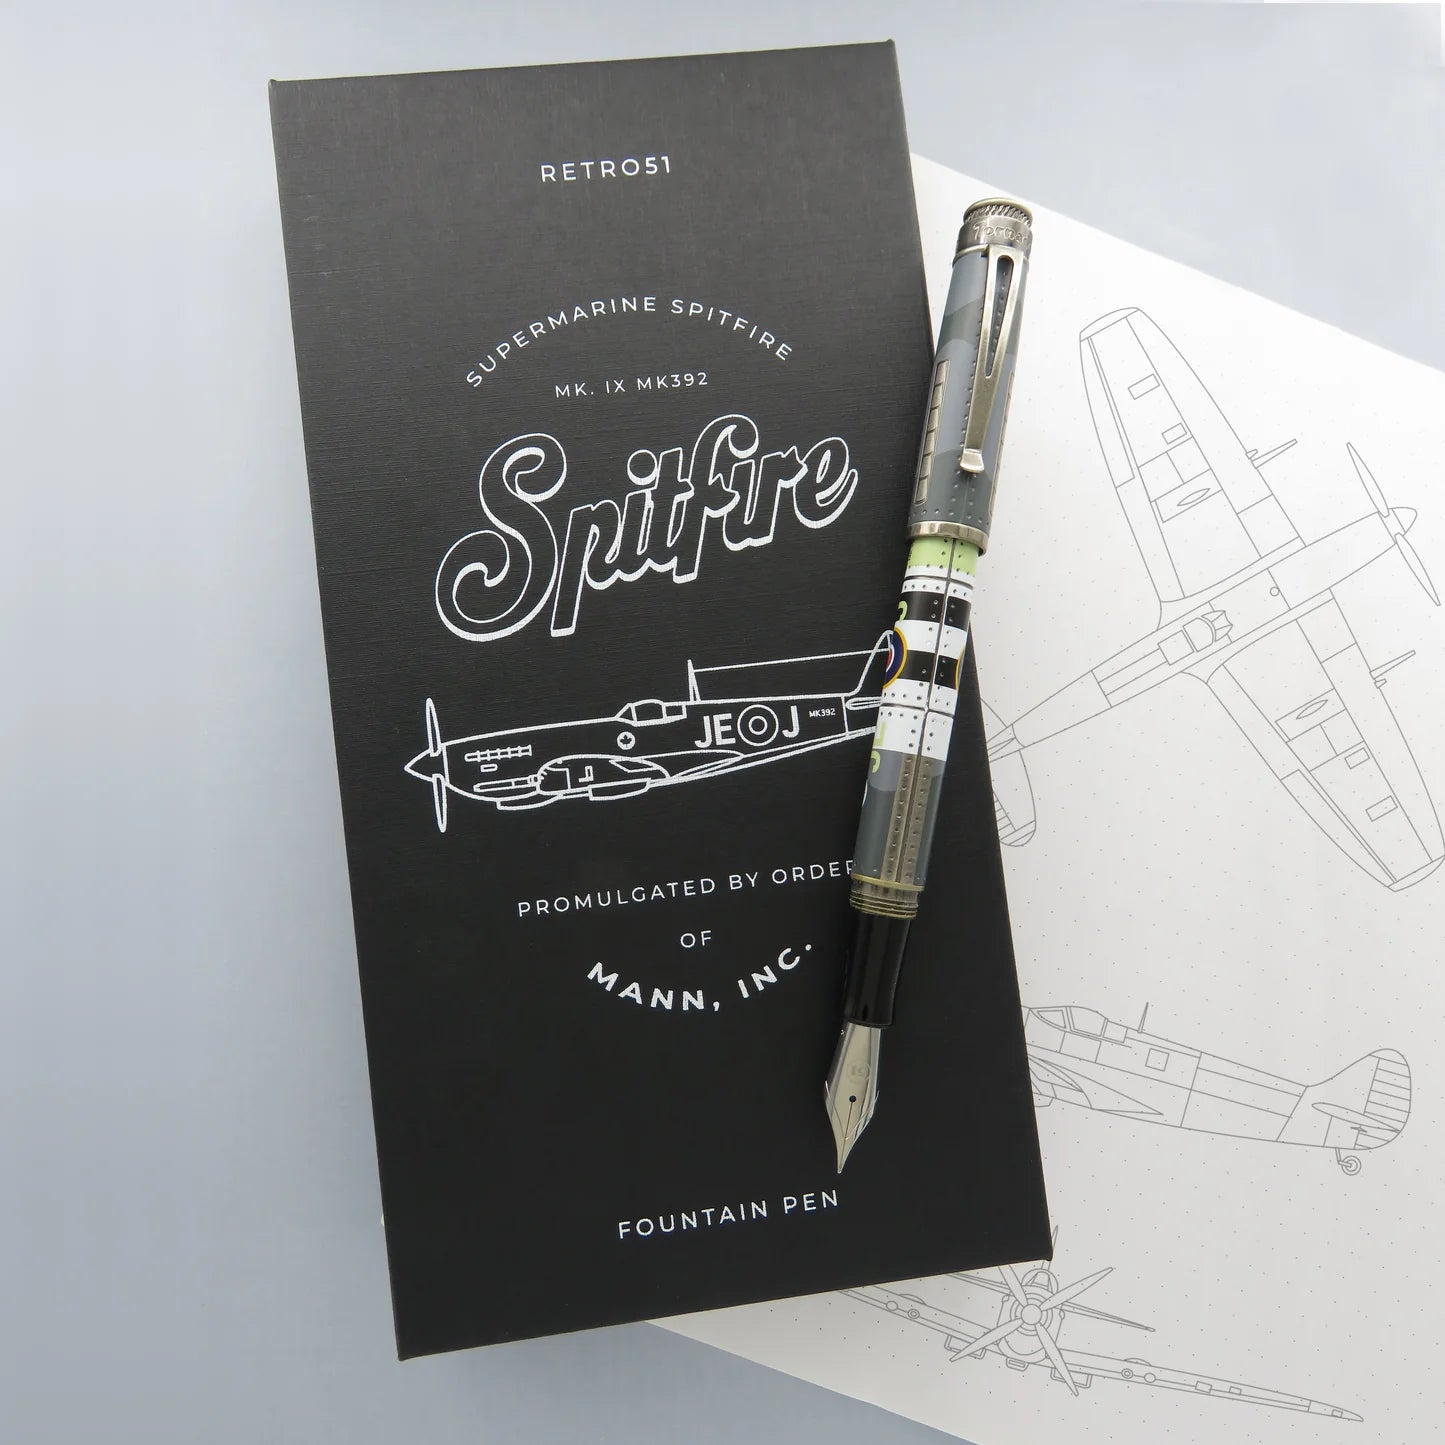 Retro 51 Fountain Pen - Spitfire Collectors Edition Gift Box (Mann Inc Exclusive)